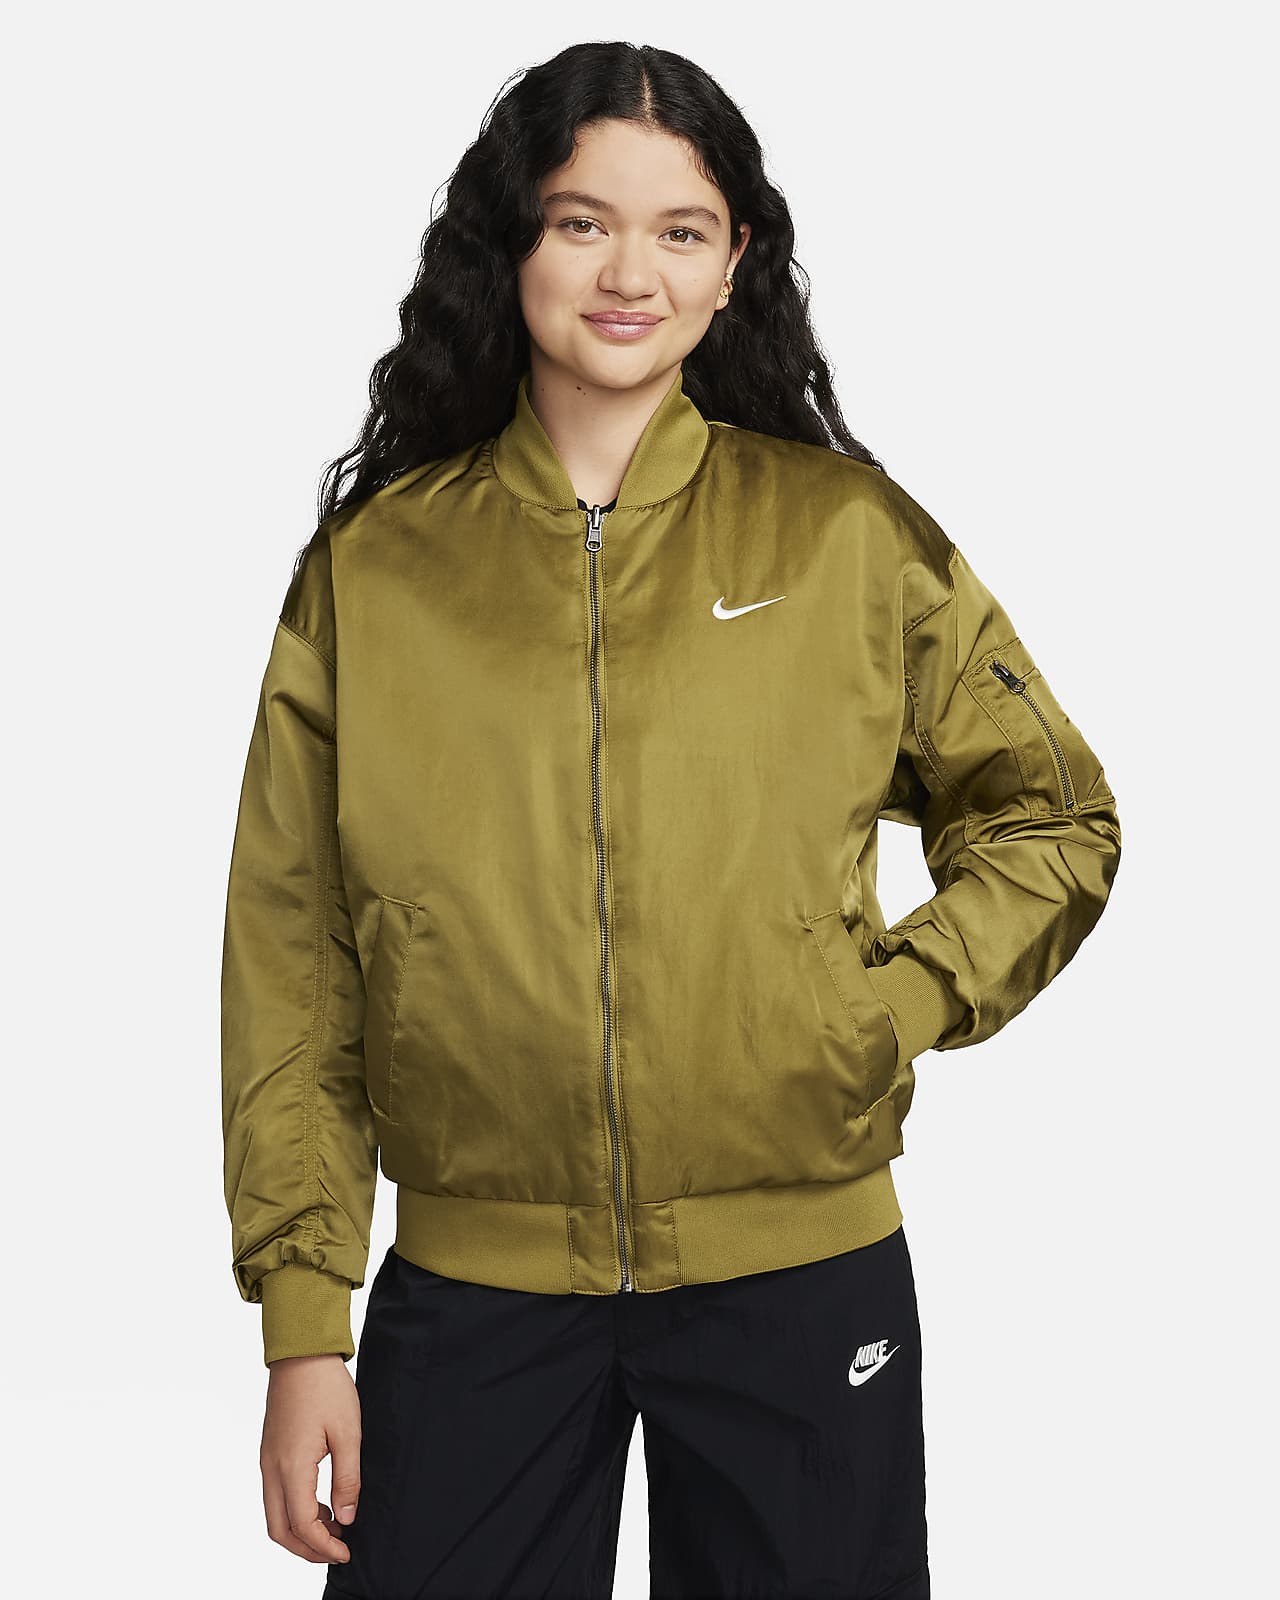 Women's jacket adidas Originals Sportswear - Jackets - Women - Clothes